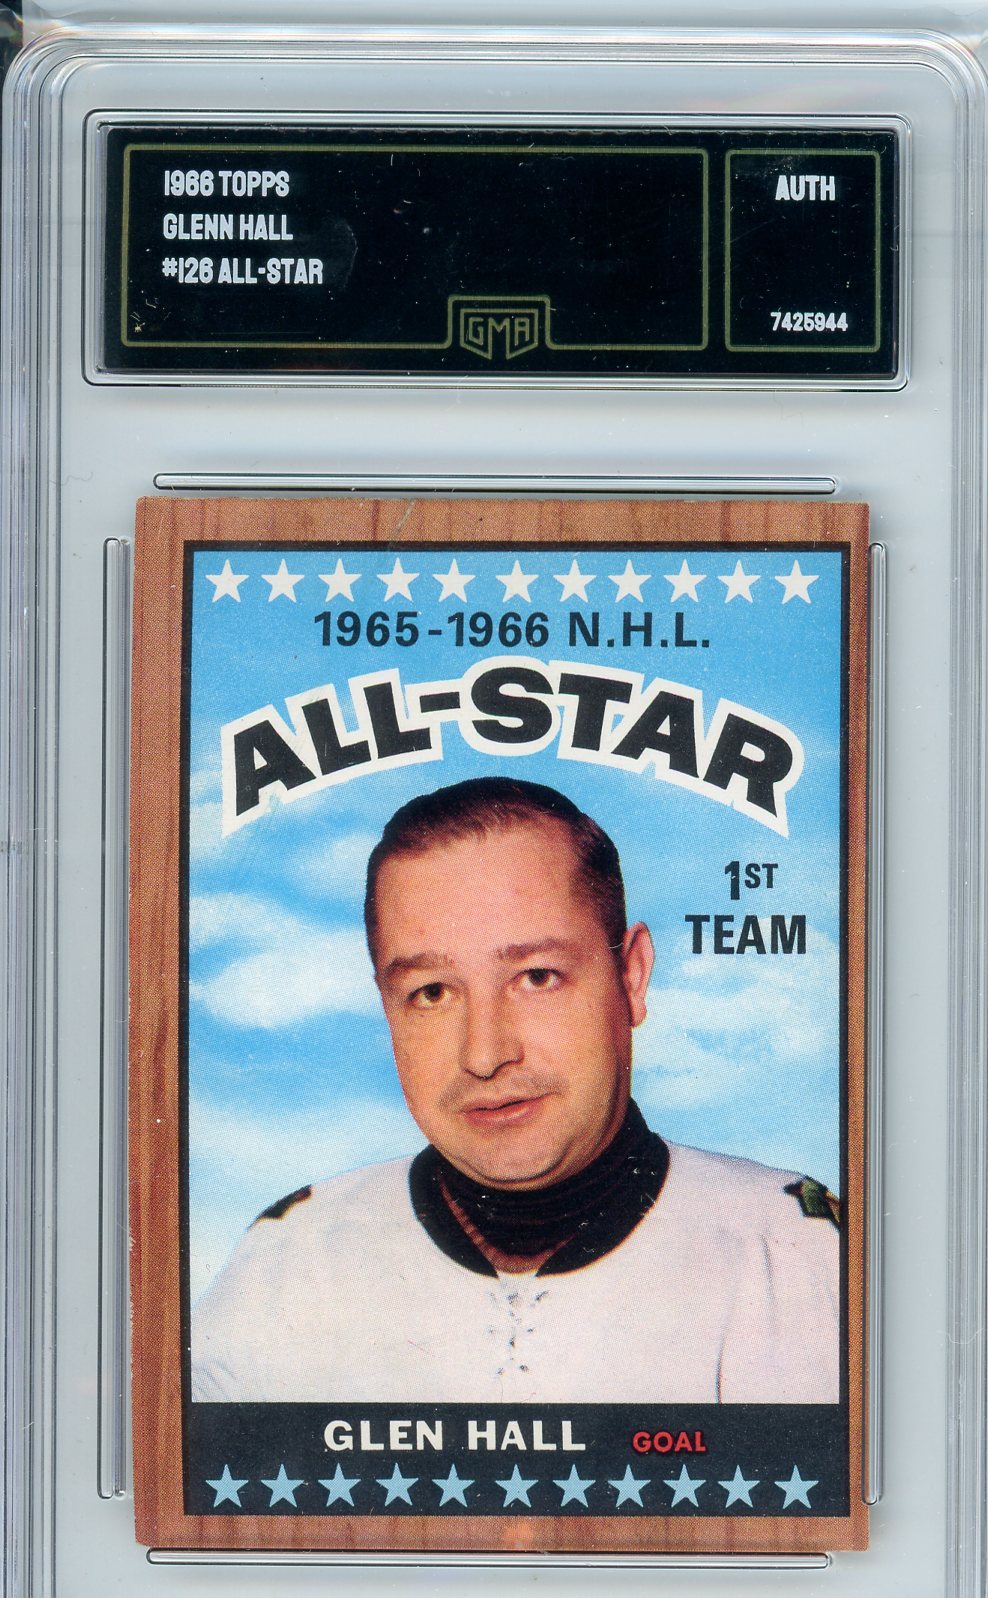 1966 Topps Glenn Hall #126 All-Star Hockey Card GMA Authenticated